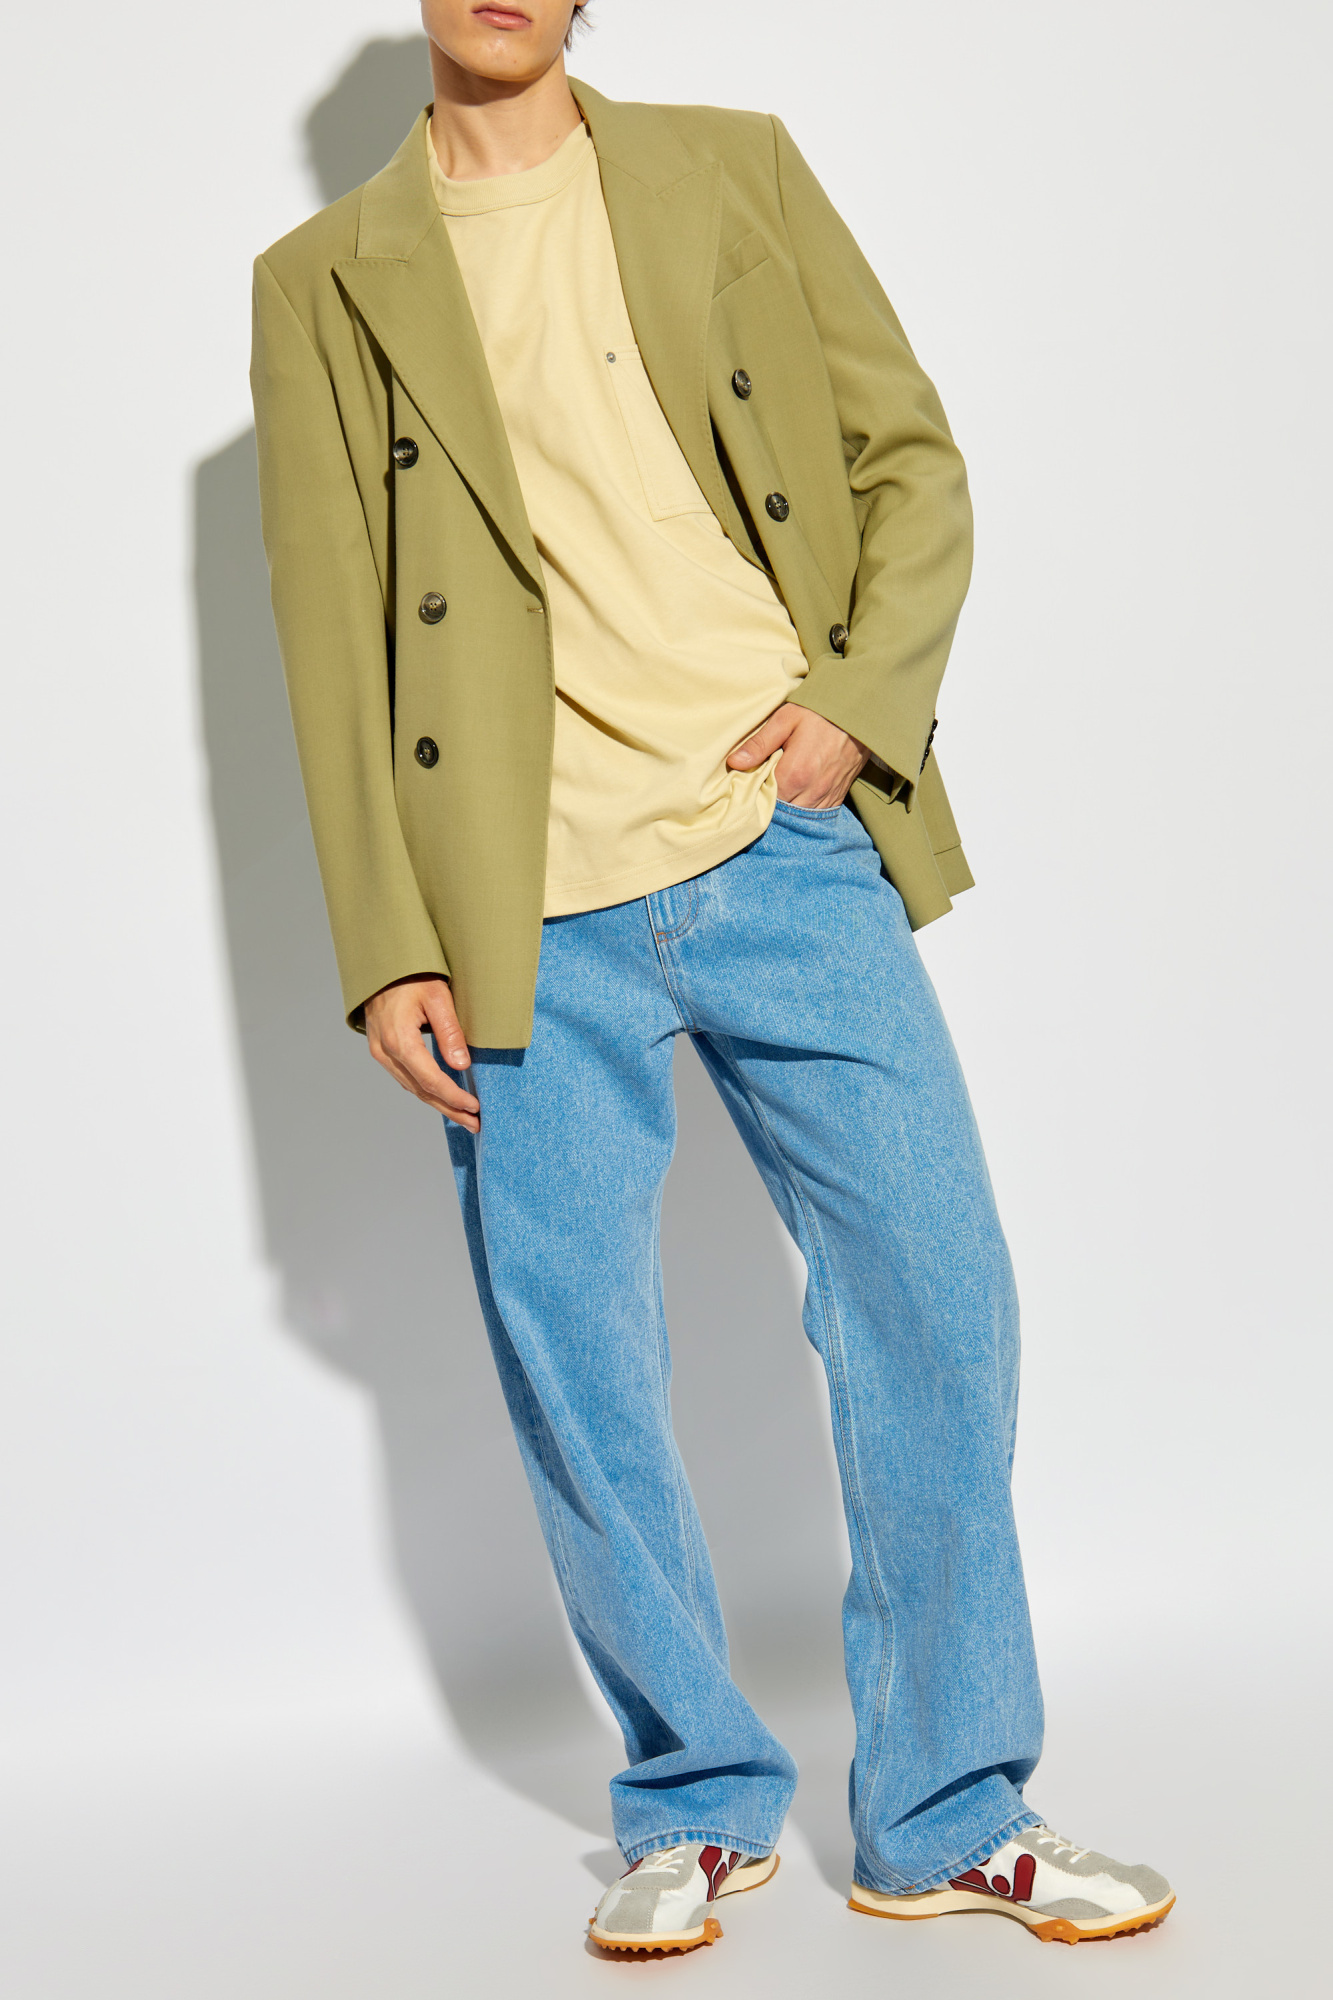 marni coat Loose-fit jeans